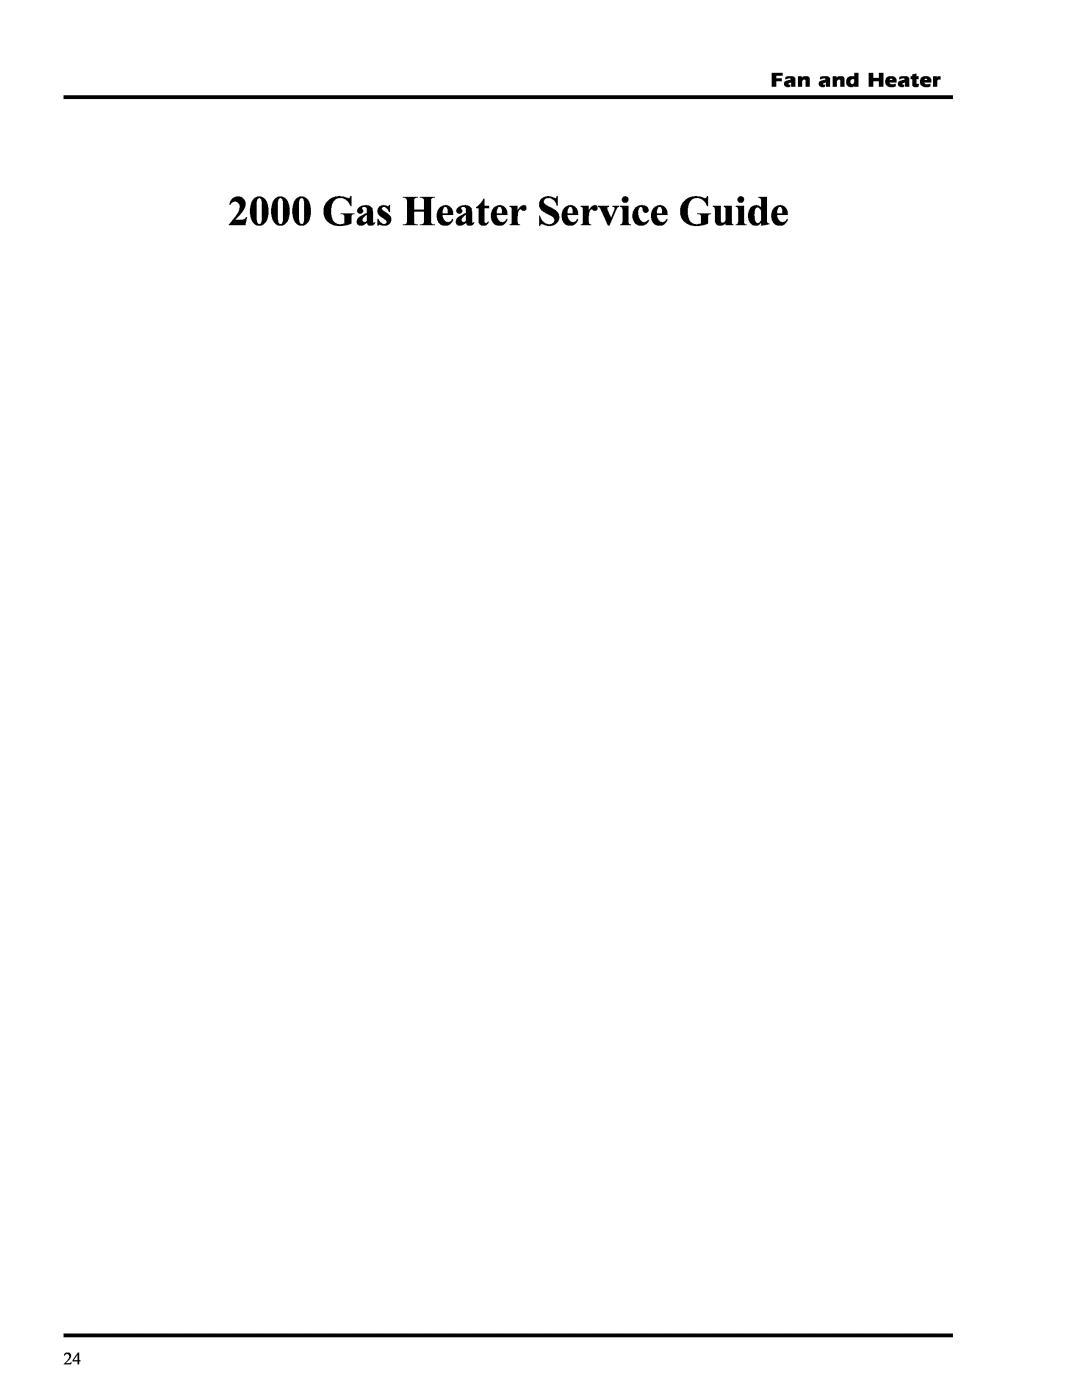 GSI Outdoors PNEG-377 service manual Gas Heater Service Guide, Fan and Heater 